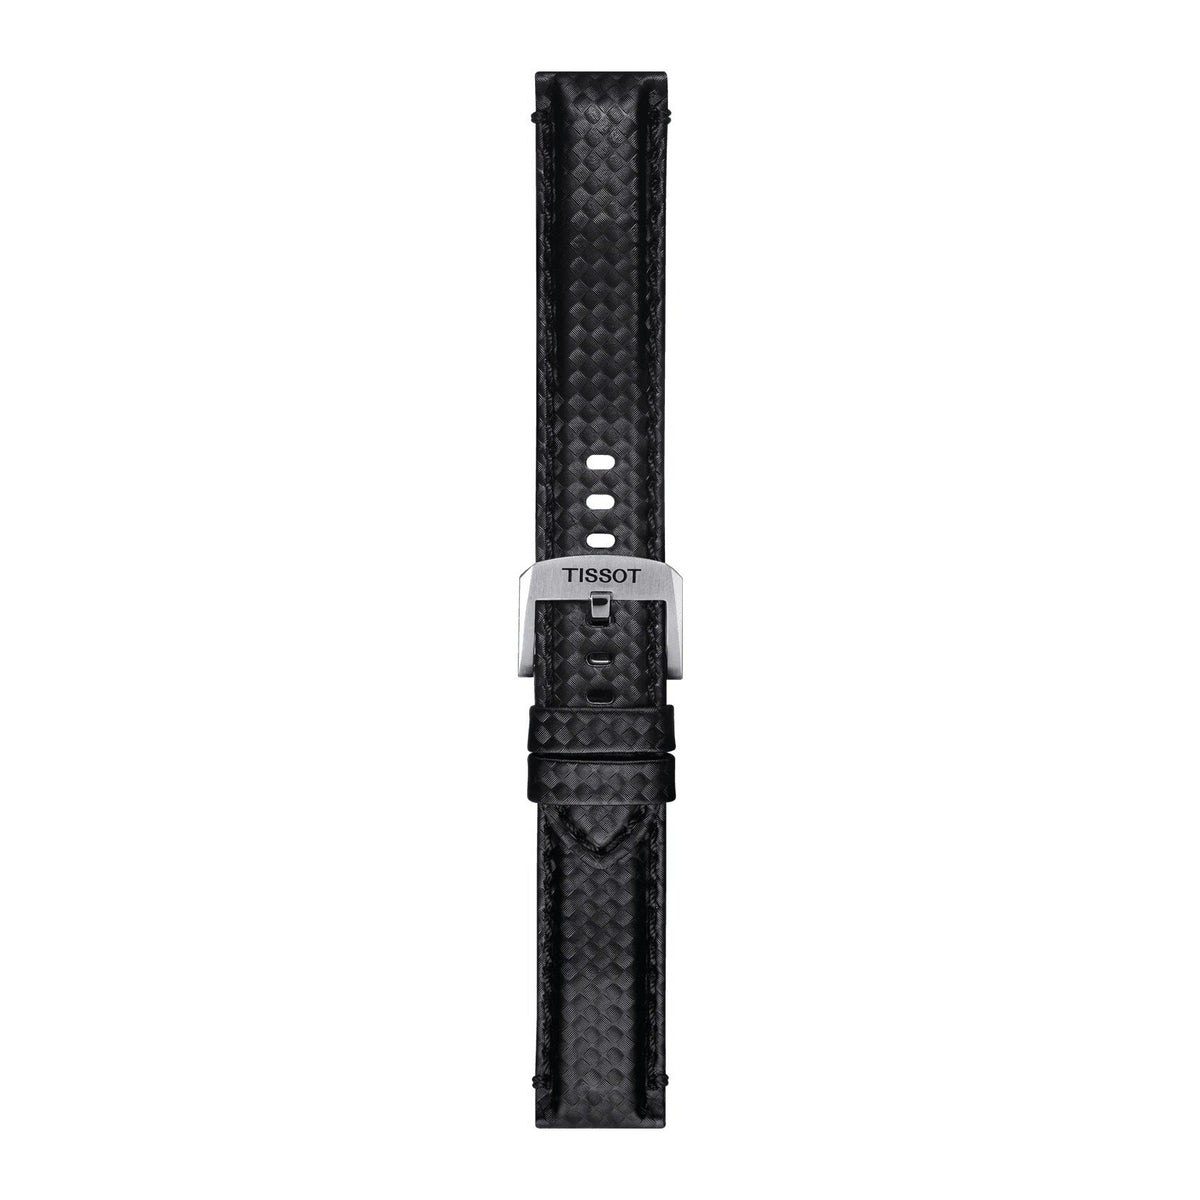 Official Tissot BLACK FABRIC strap ANSA 20 MM T852046829